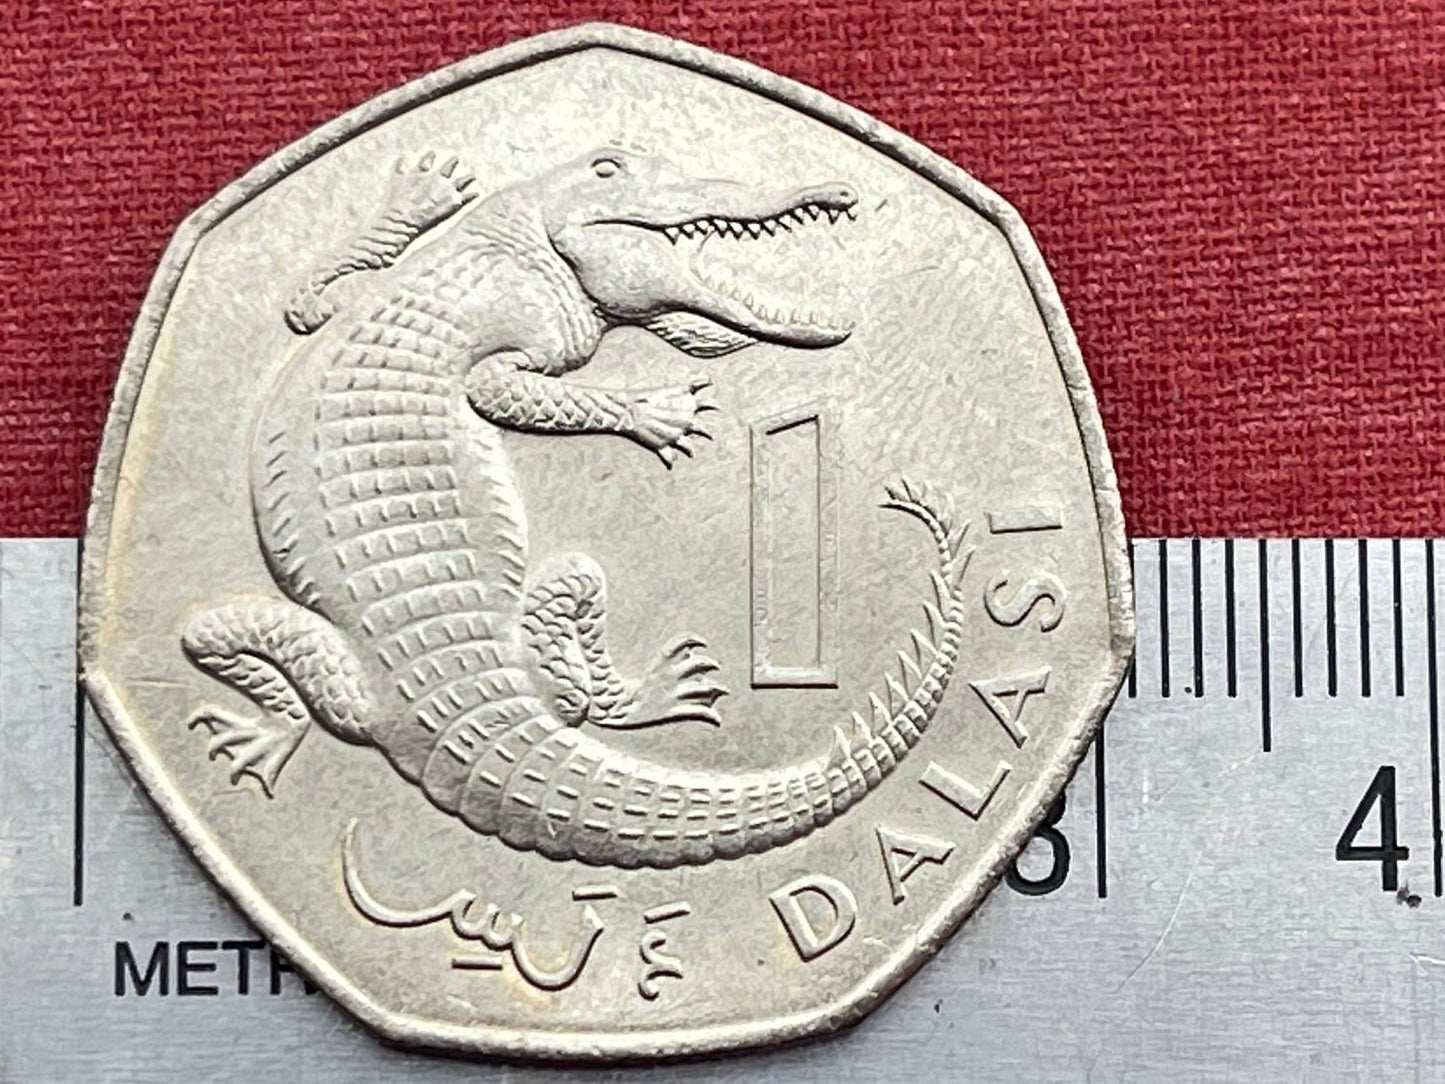 West African Slender-Snouted Crocodile & President Dawda Kairaba Jawara 1 Dalasi Gambia Authentic Coin Money for Jewelry (Heptagonal) 1987